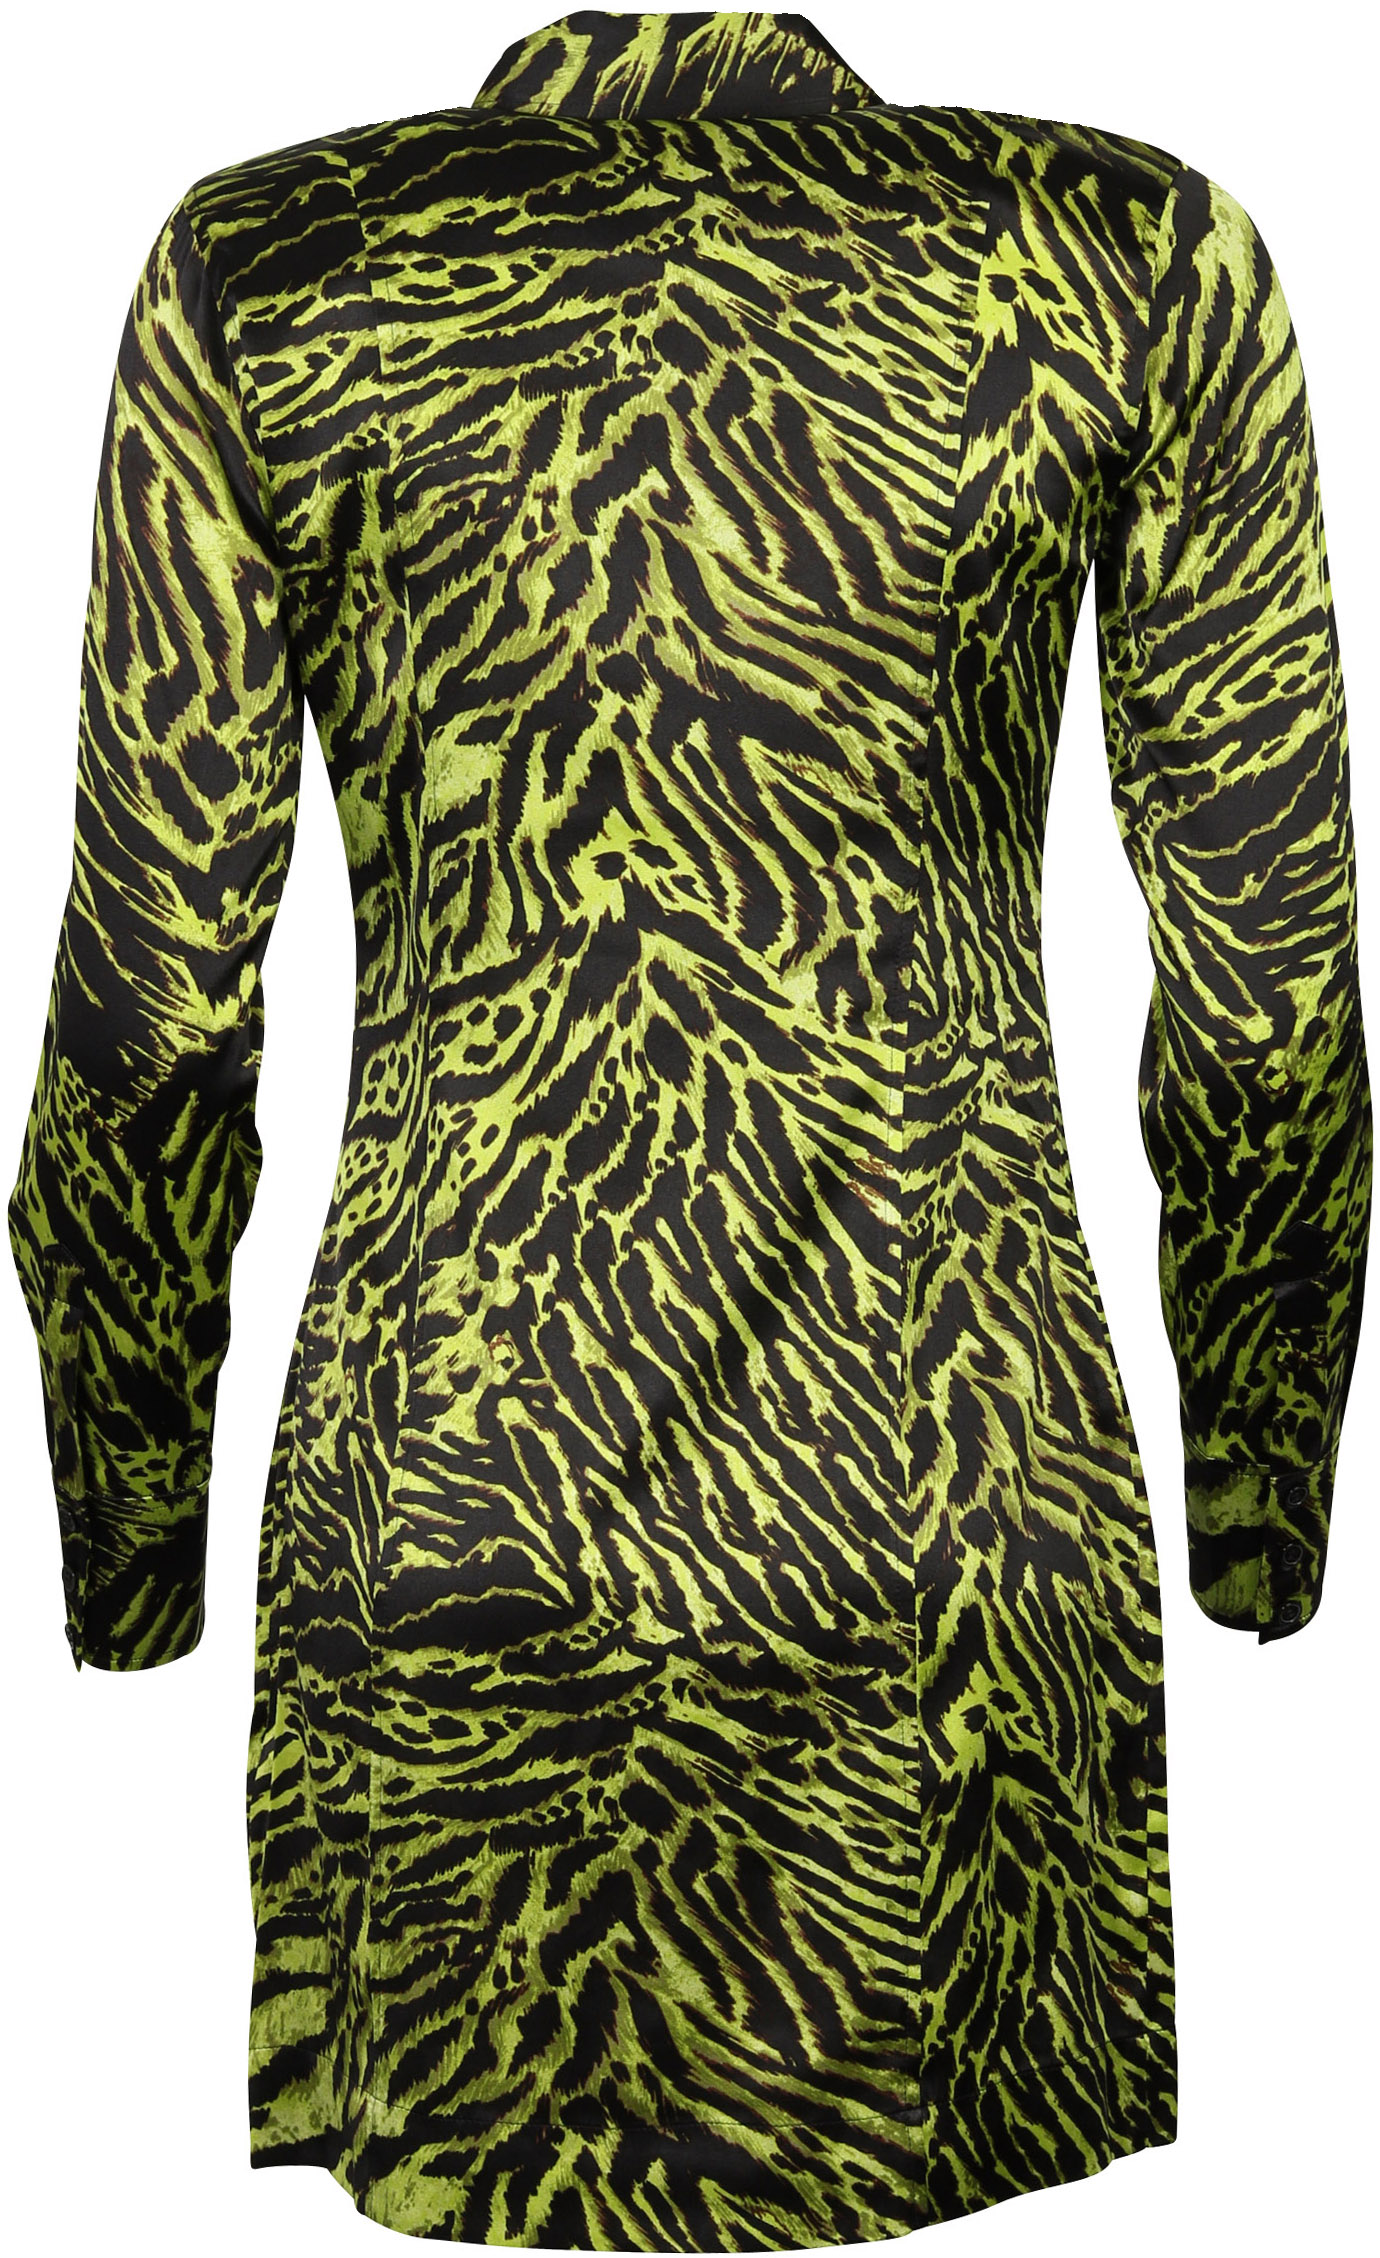 Ganni Shirt Dress Lime Tiger Print 34